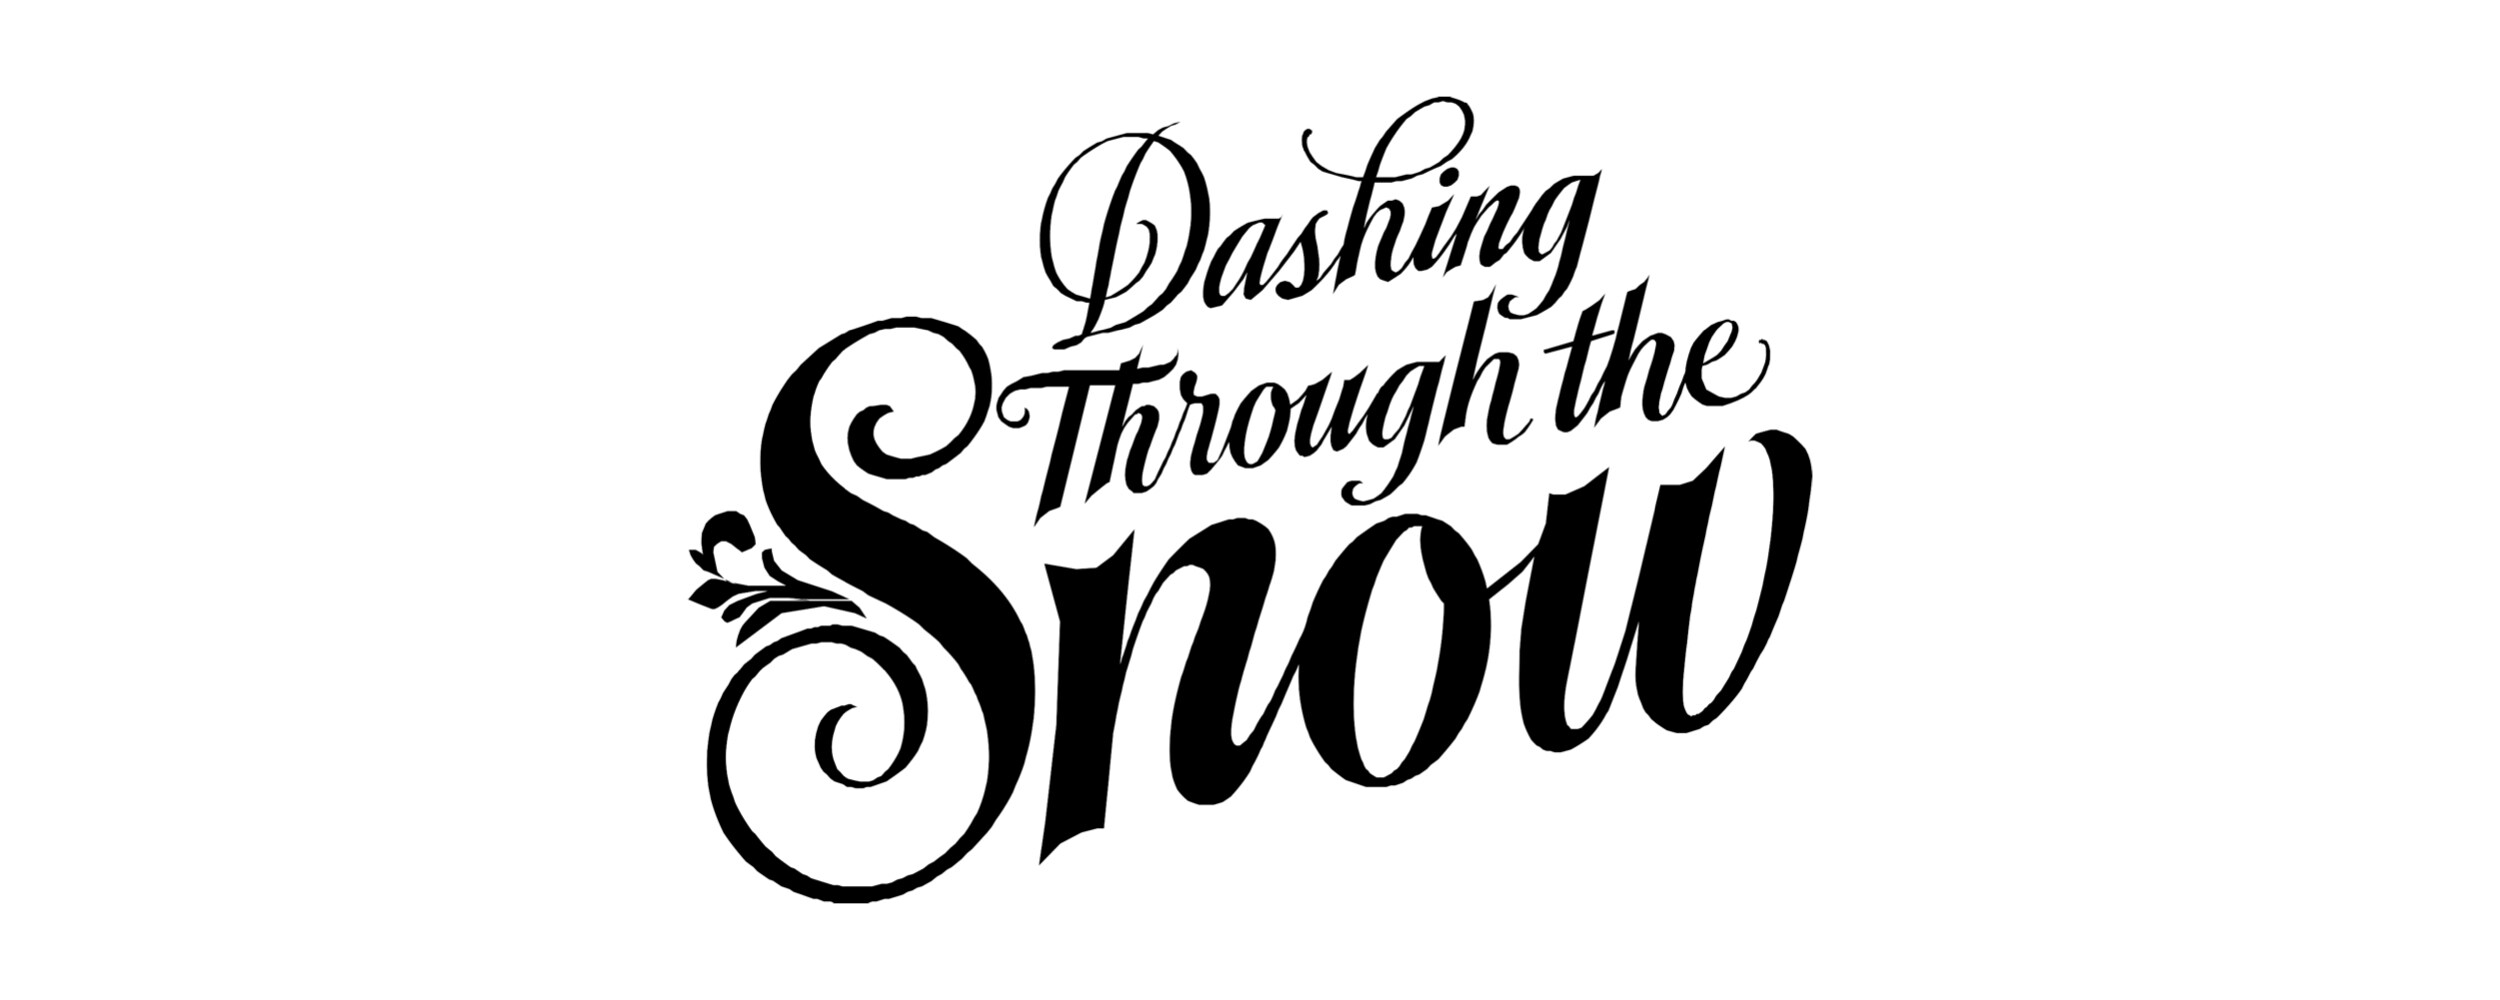 “Dashing Through The Snow” Starring Lil Rel Howery, Chris “Ludacris